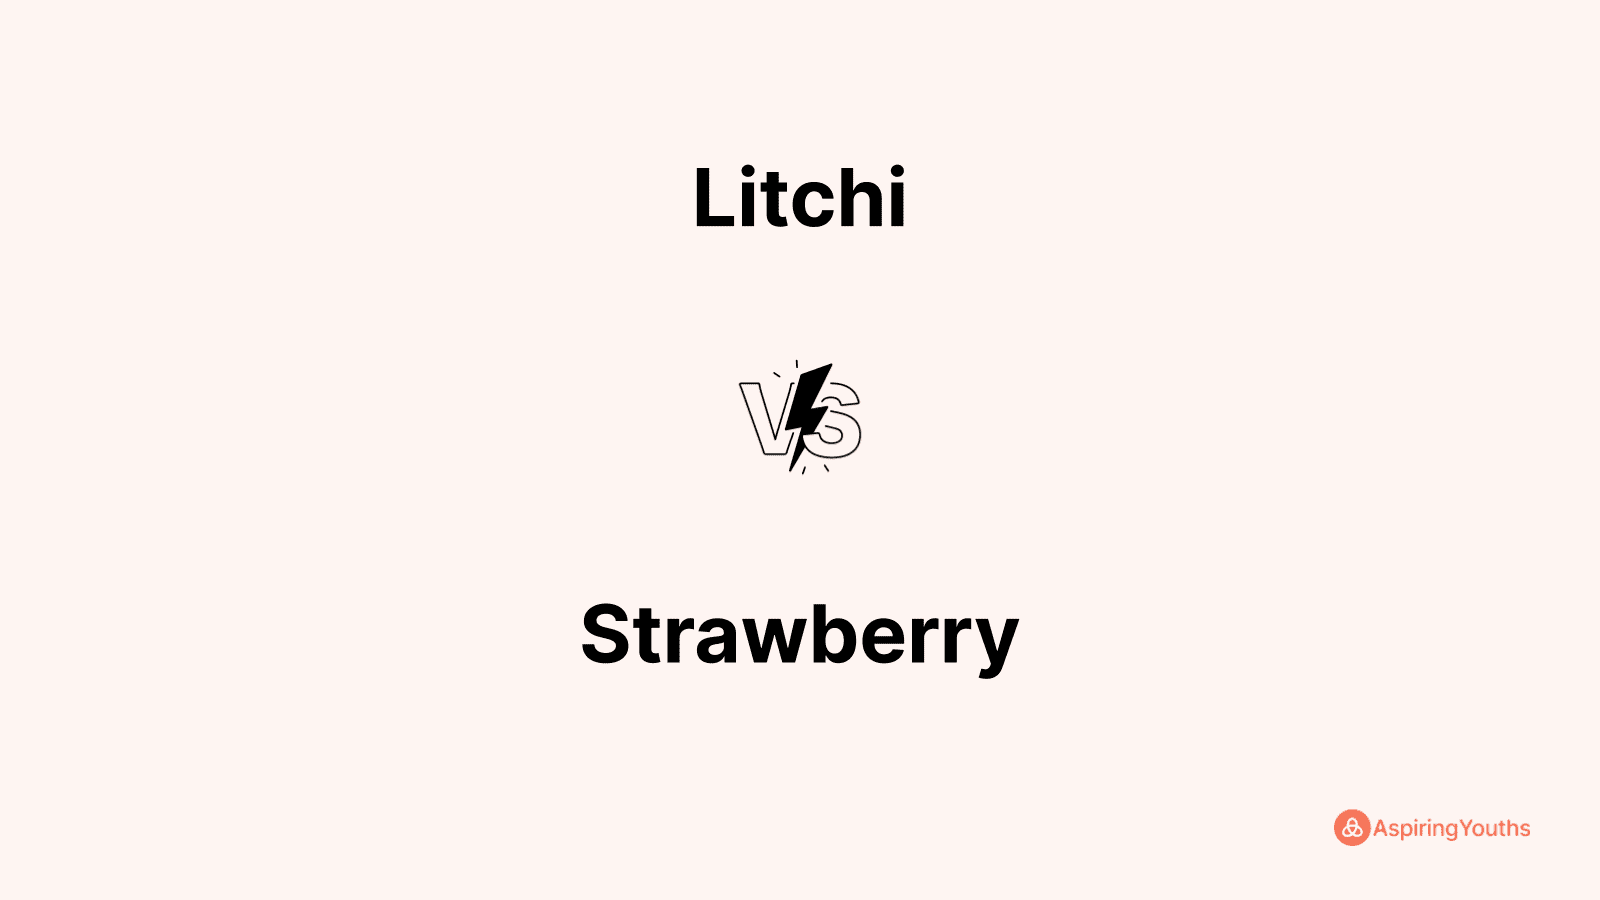 Litchi vs Strawberry